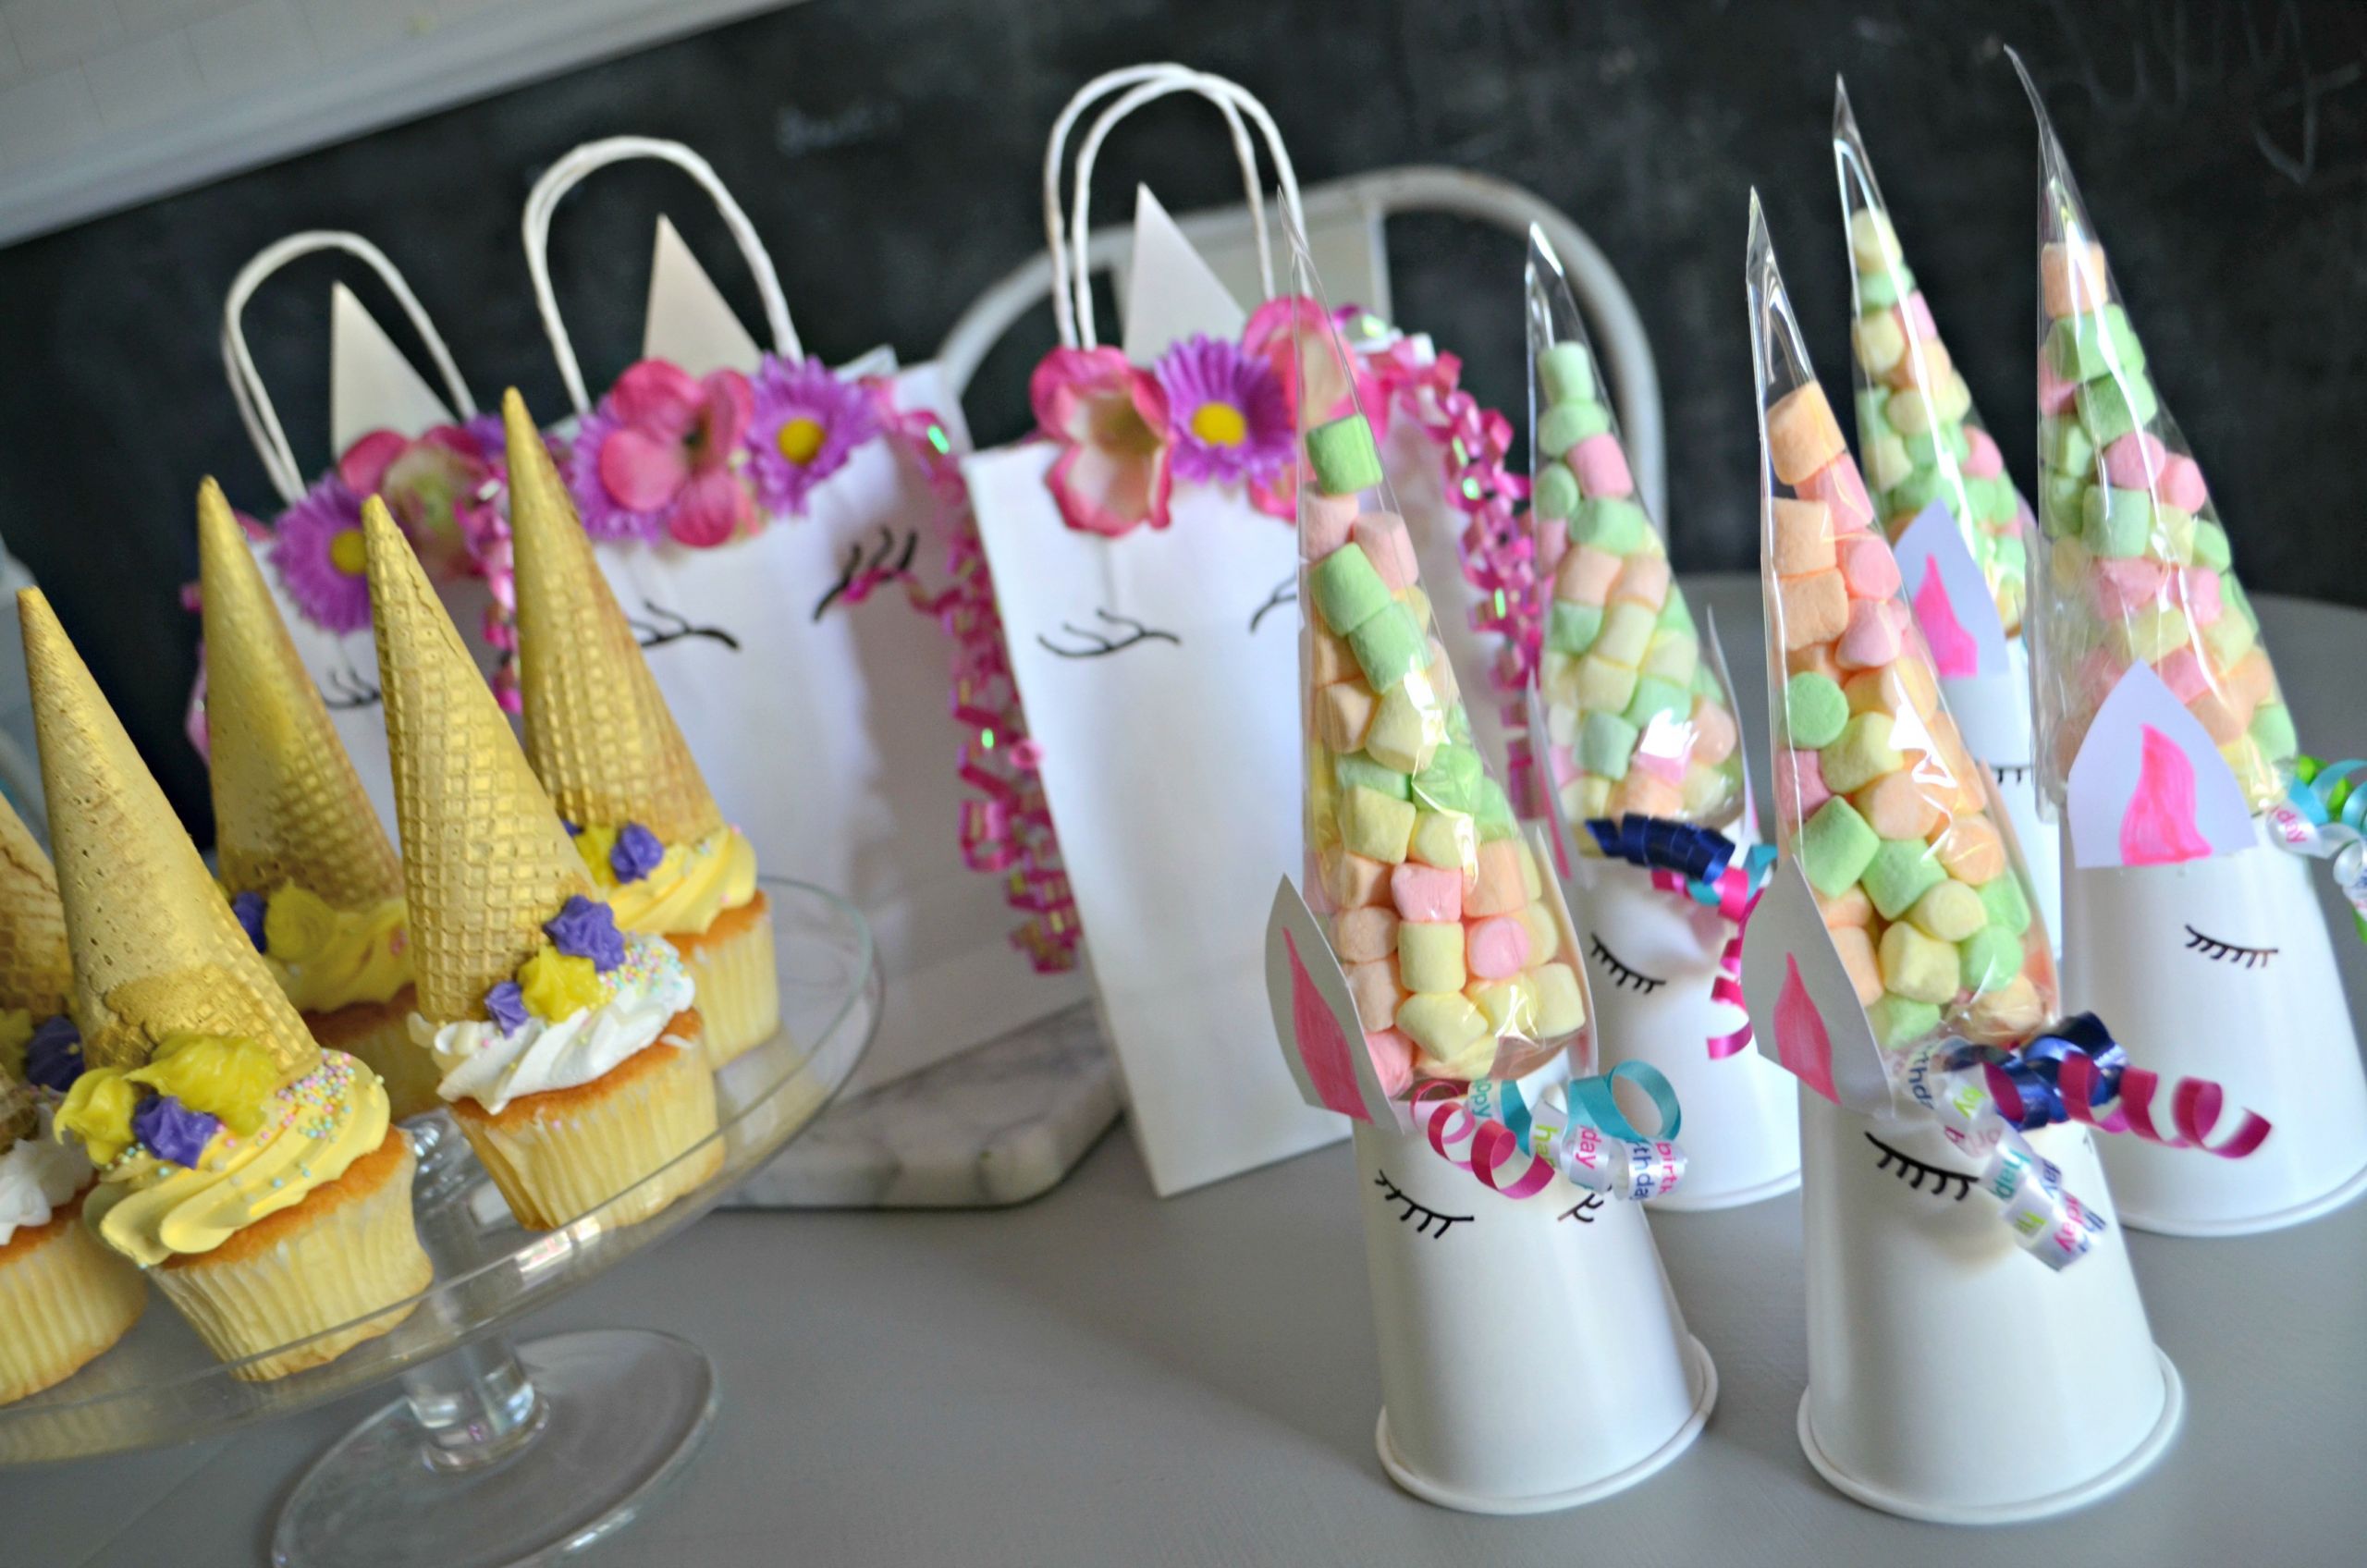 Unicorn Party Theme Food Ideas
 Make These 3 Frugal Cute and Easy DIY Unicorn Birthday